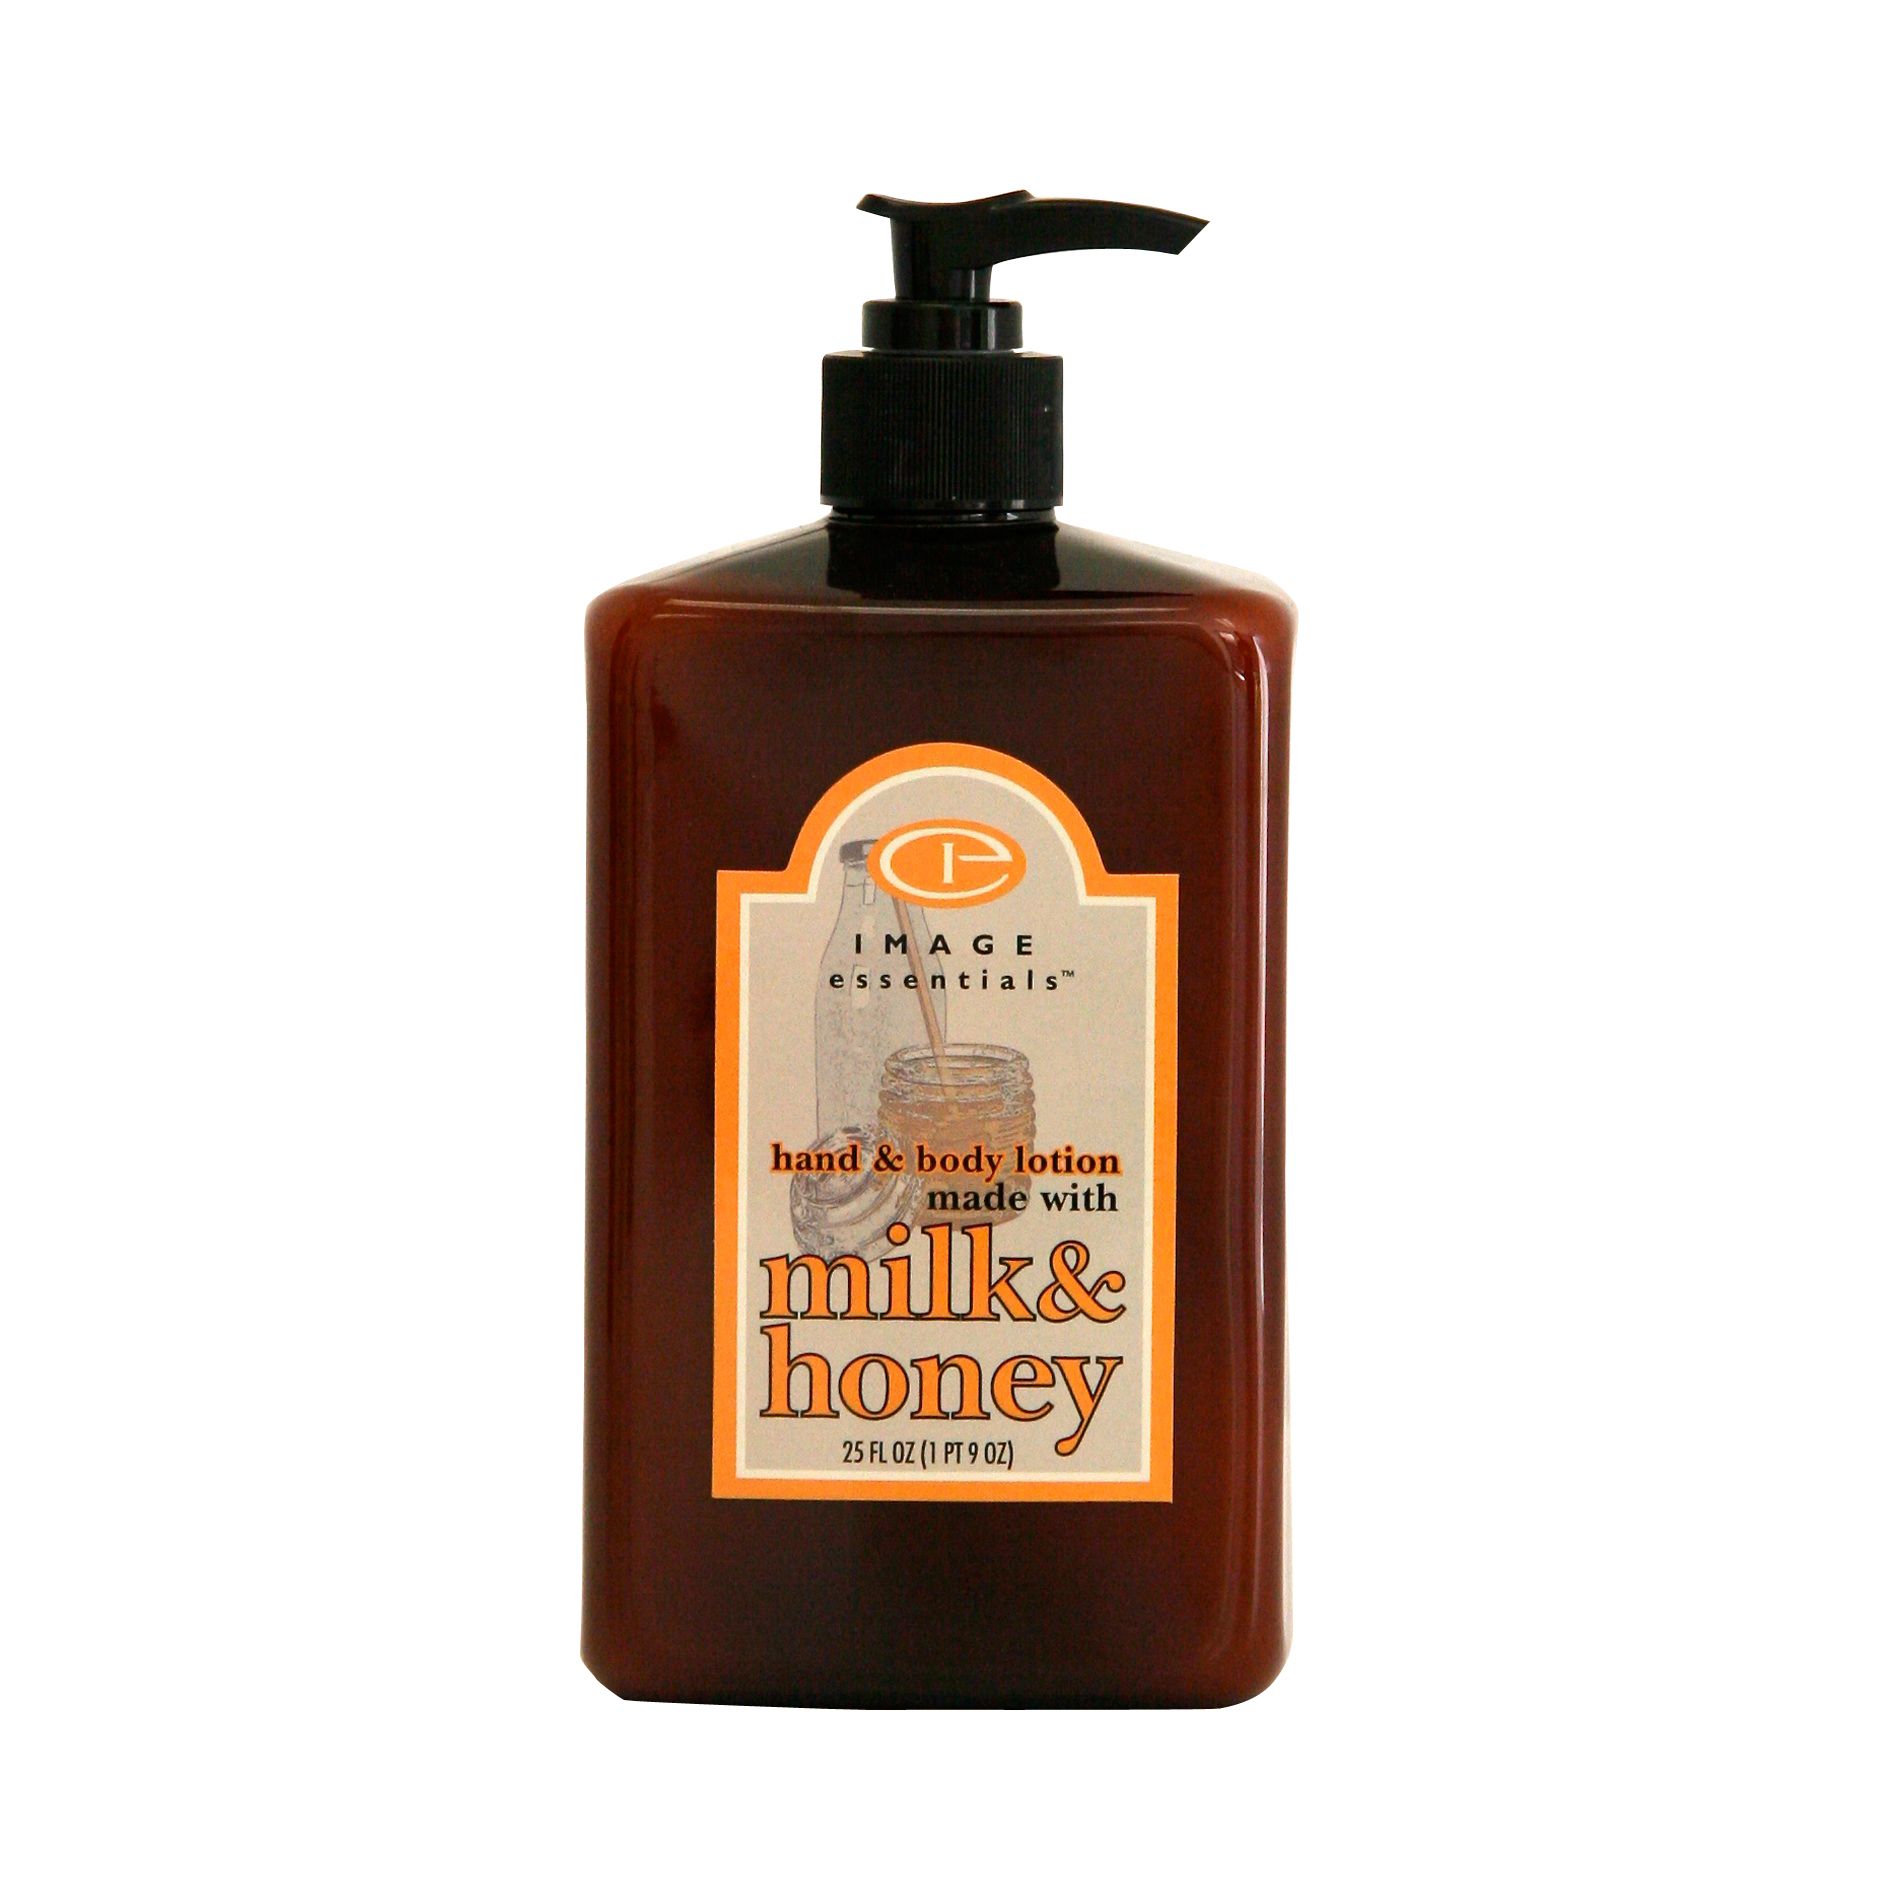 Image Essentials Milk & Honey Hand & Body Lotion Milk & Honey fragrance 25 Ounce Brown Bottle.